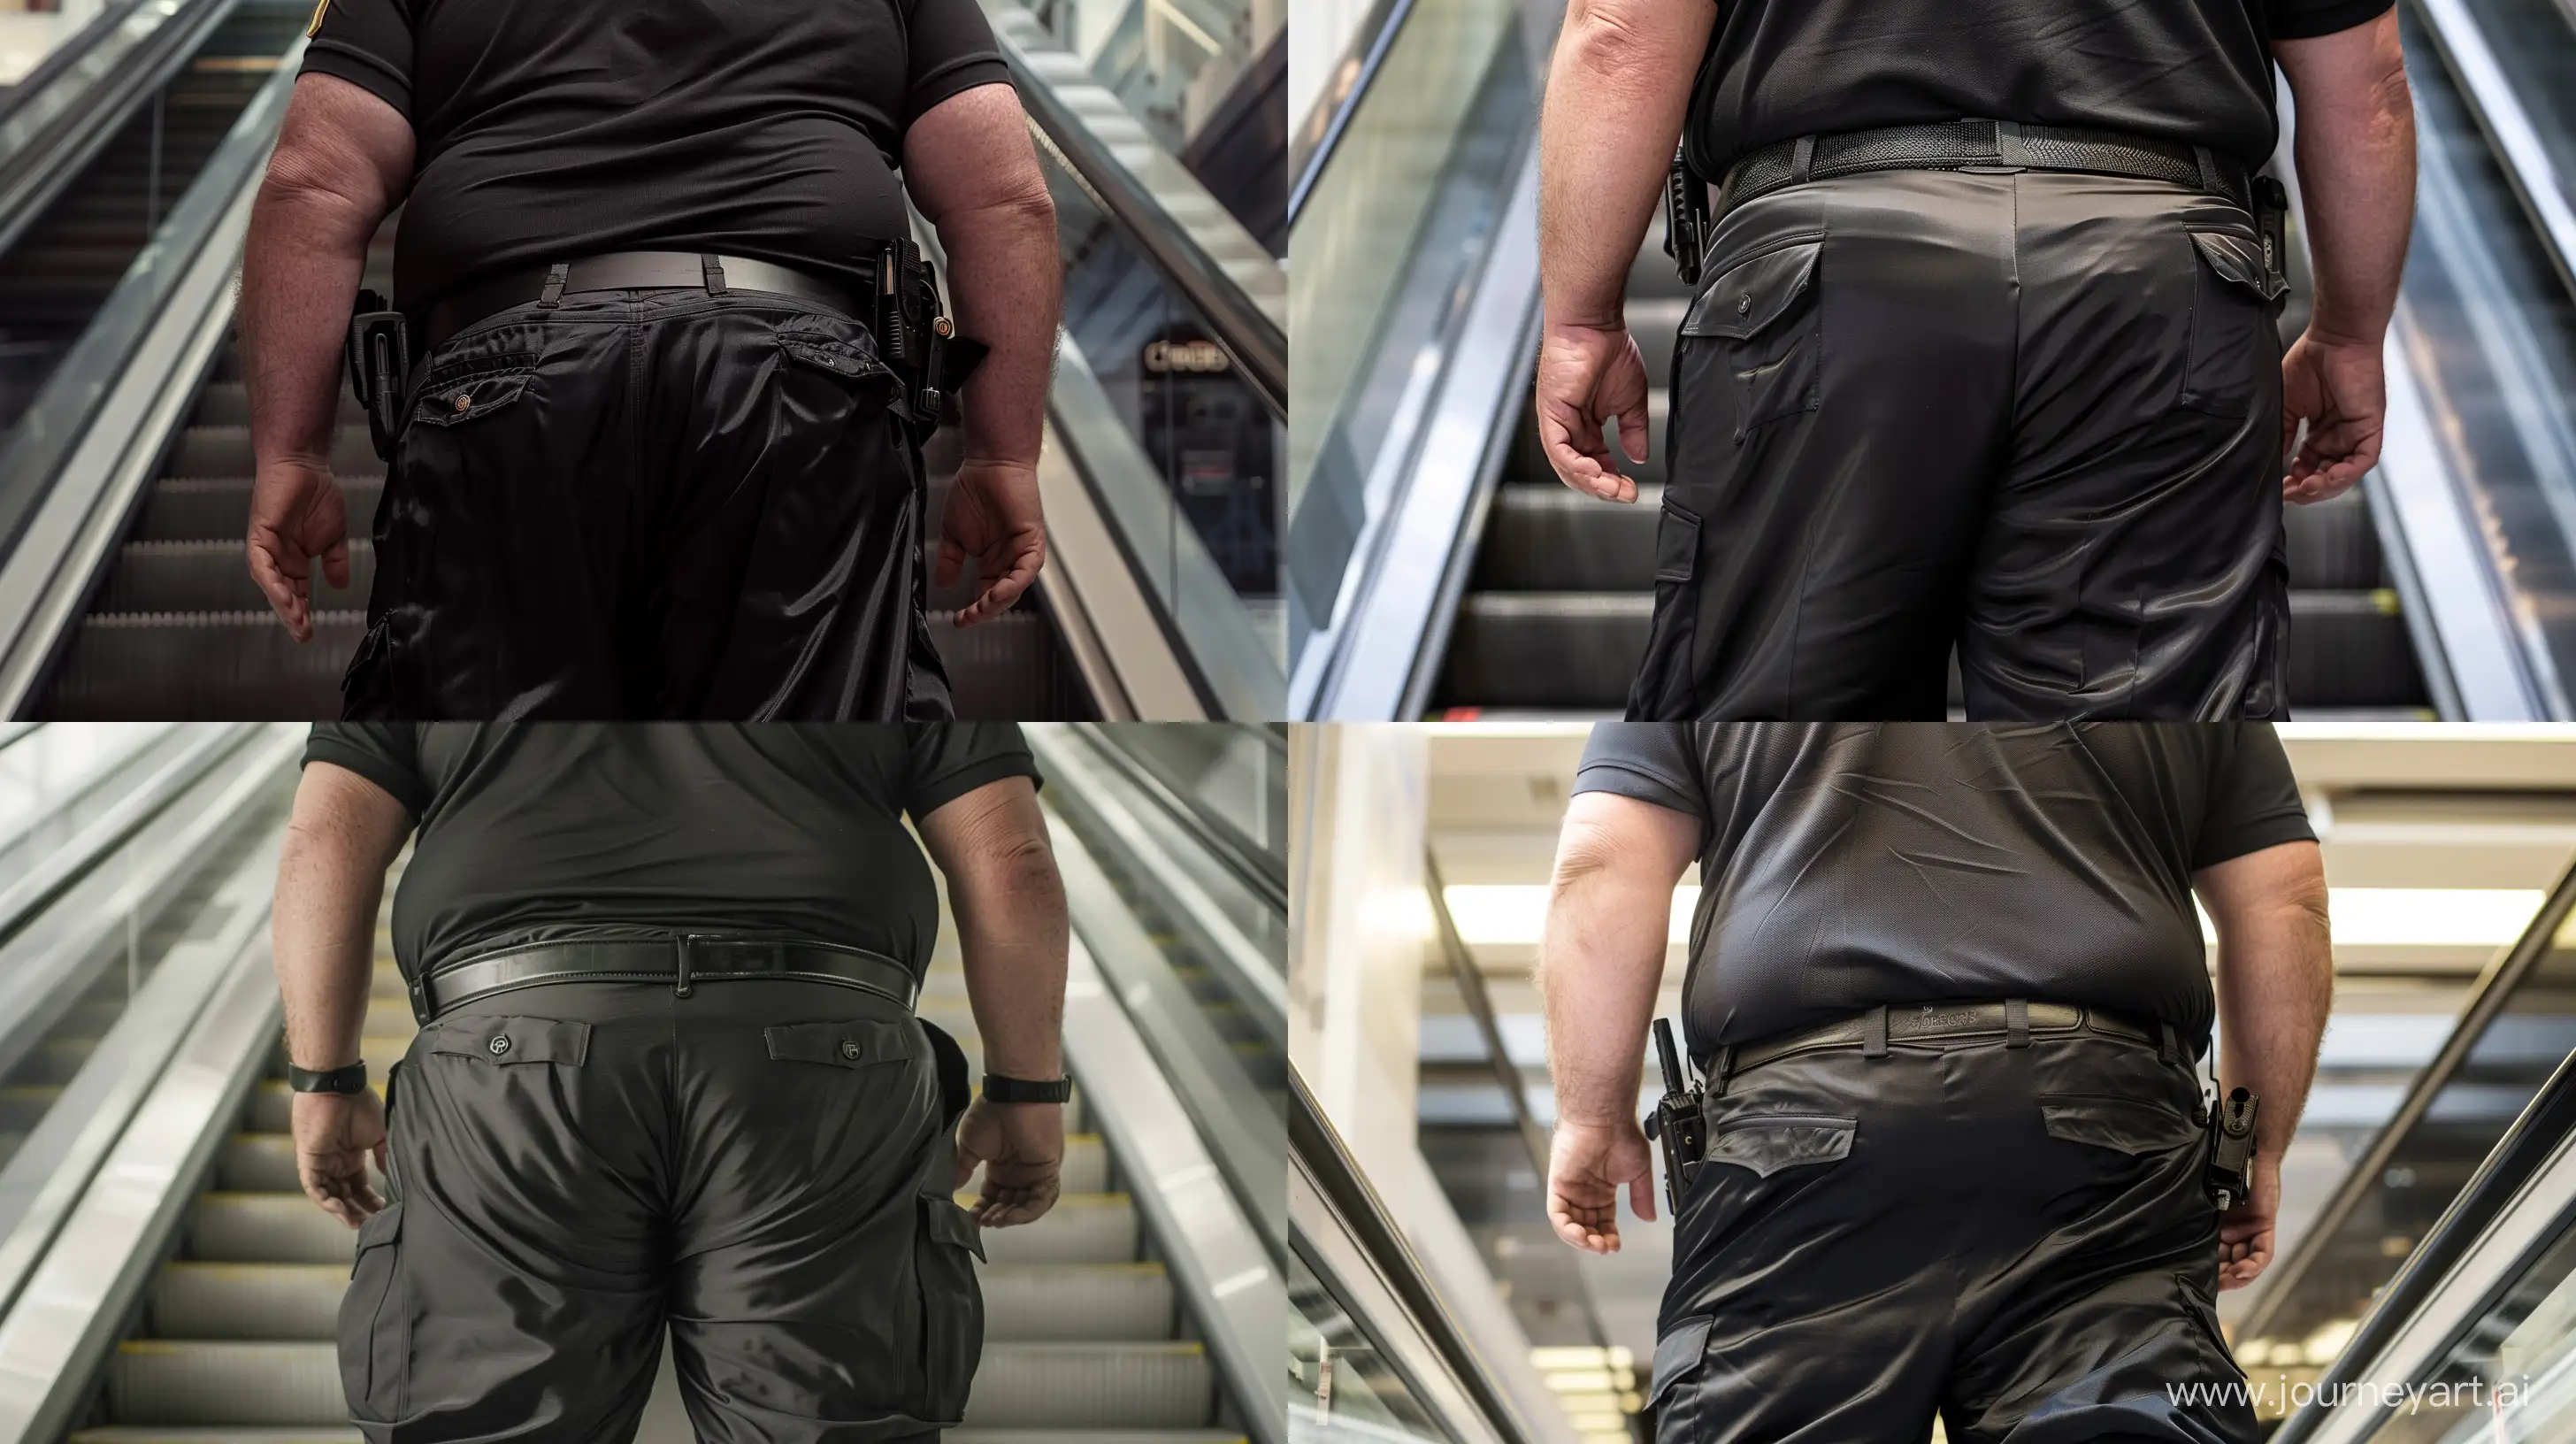 Elderly-Security-Guard-Ascending-an-Escalator-in-Black-Silk-Uniform